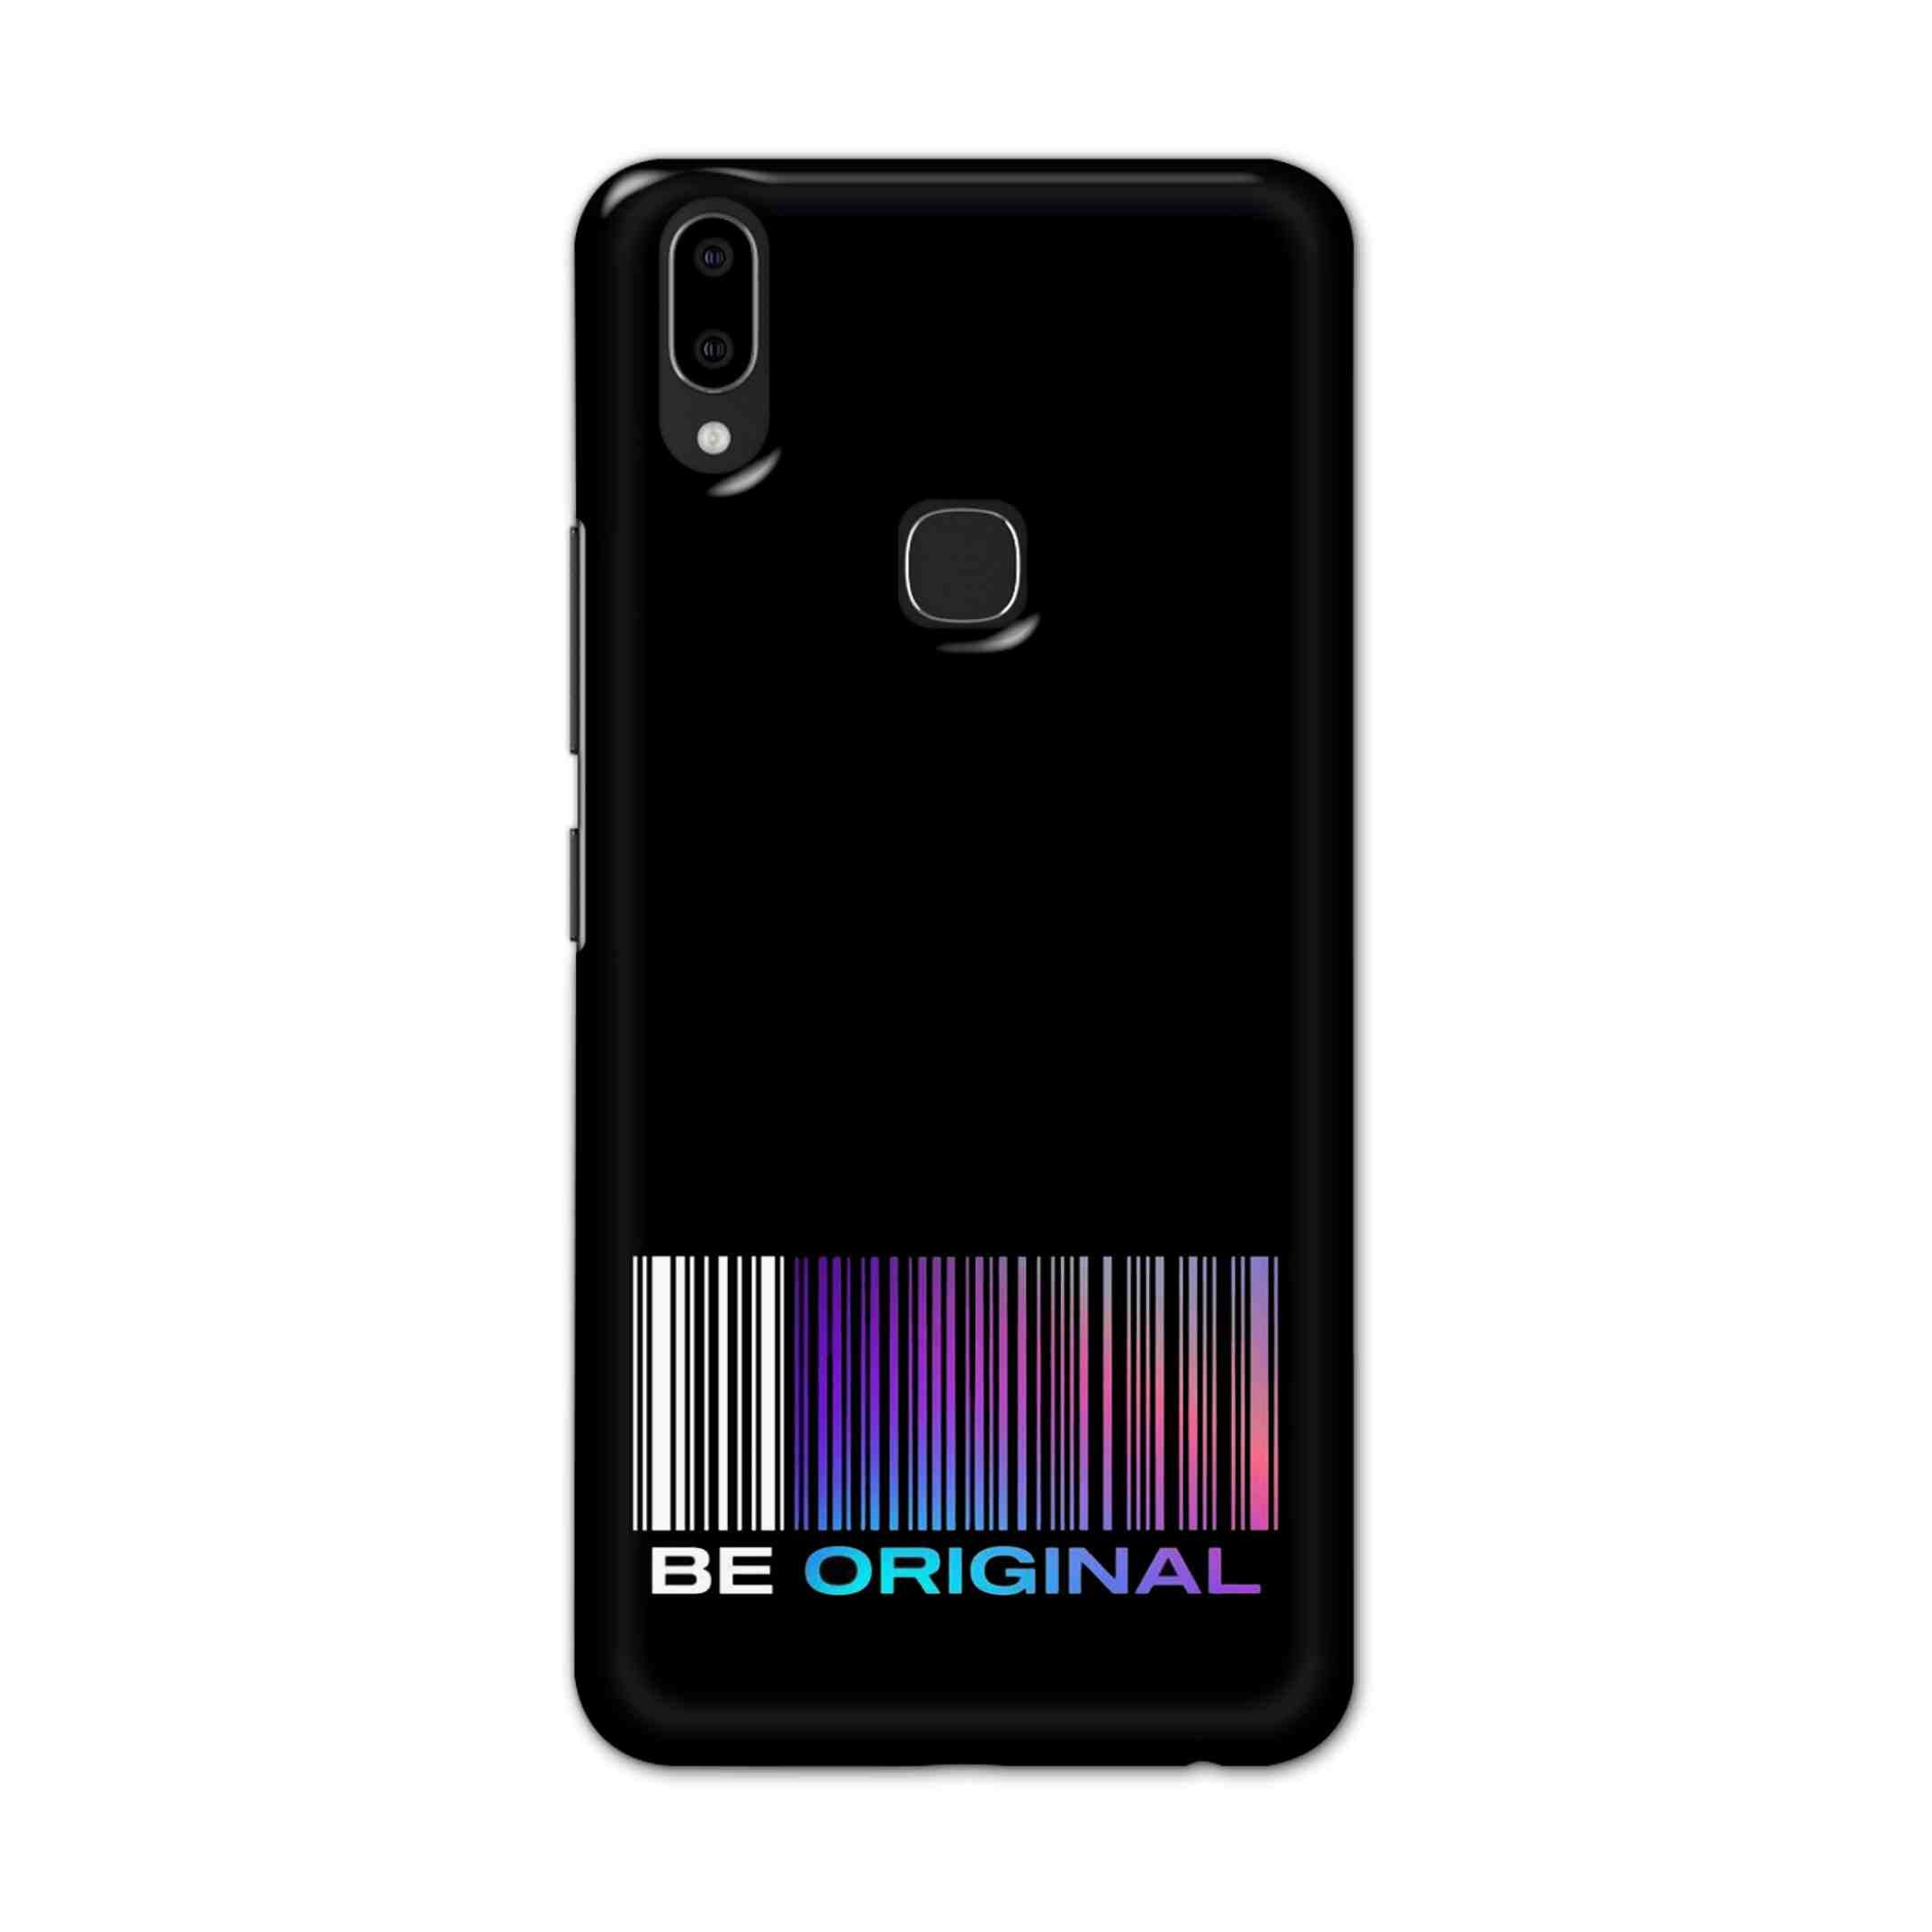 Buy Be Original Hard Back Mobile Phone Case Cover For Vivo V9 / V9 Youth Online